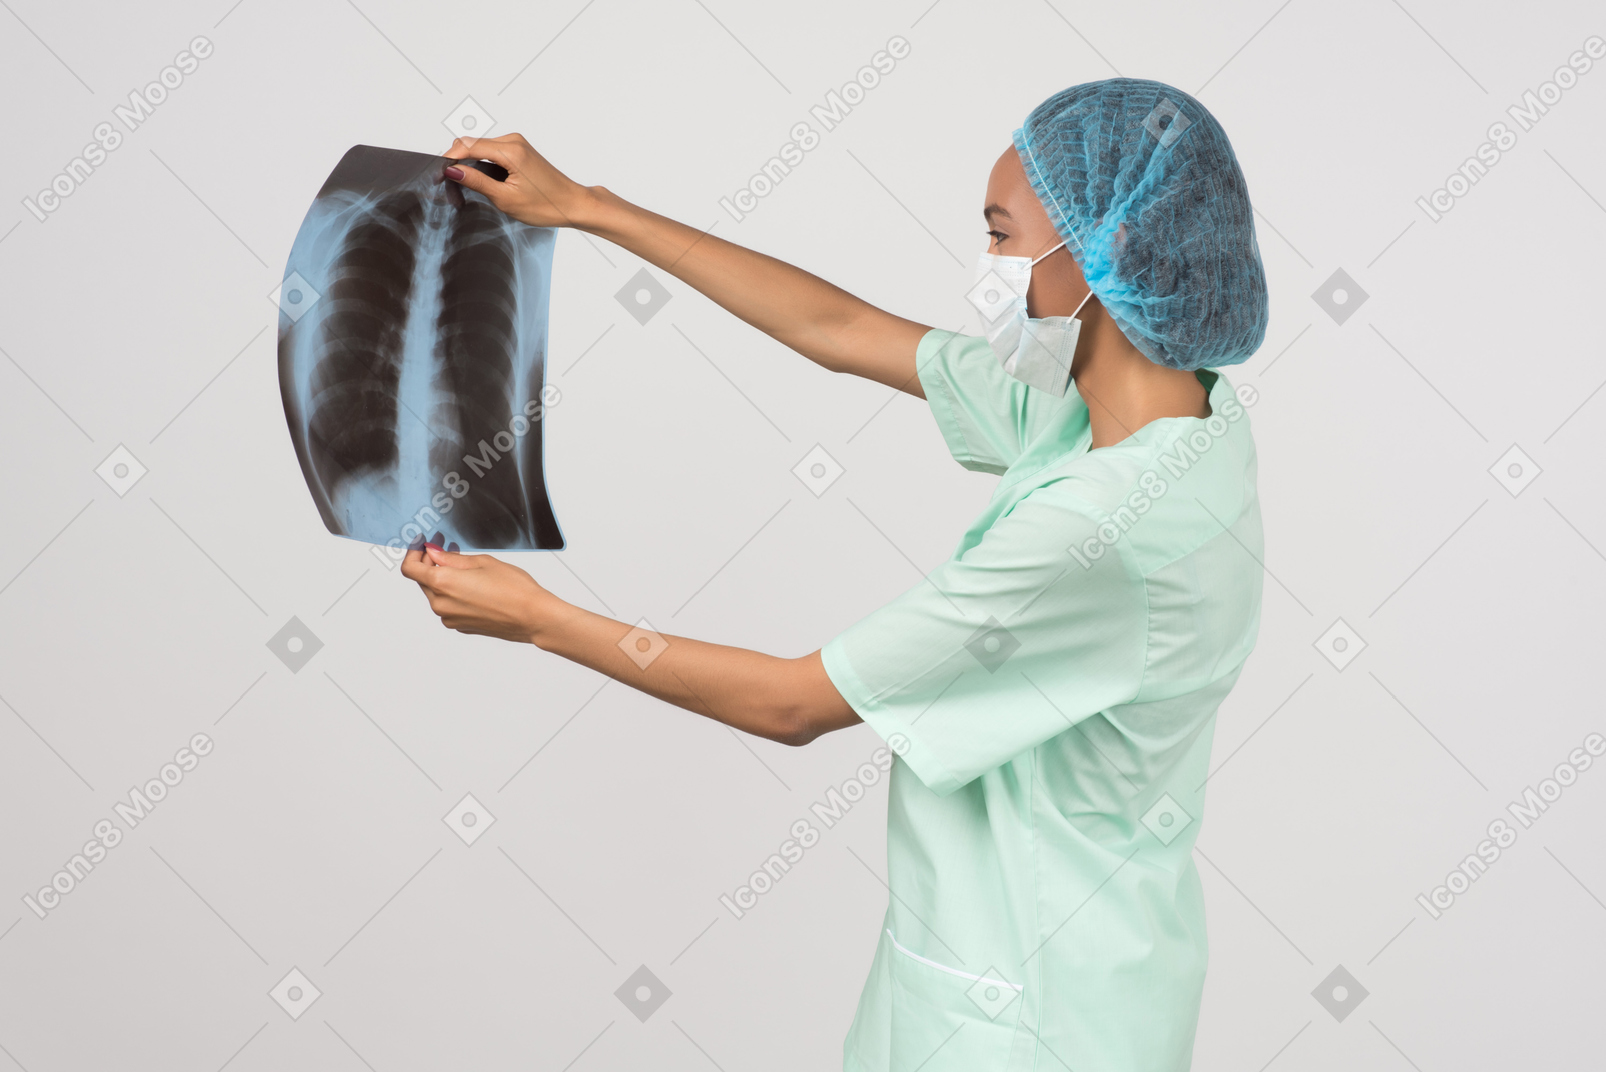 Untersuchung des lungenscans des patienten